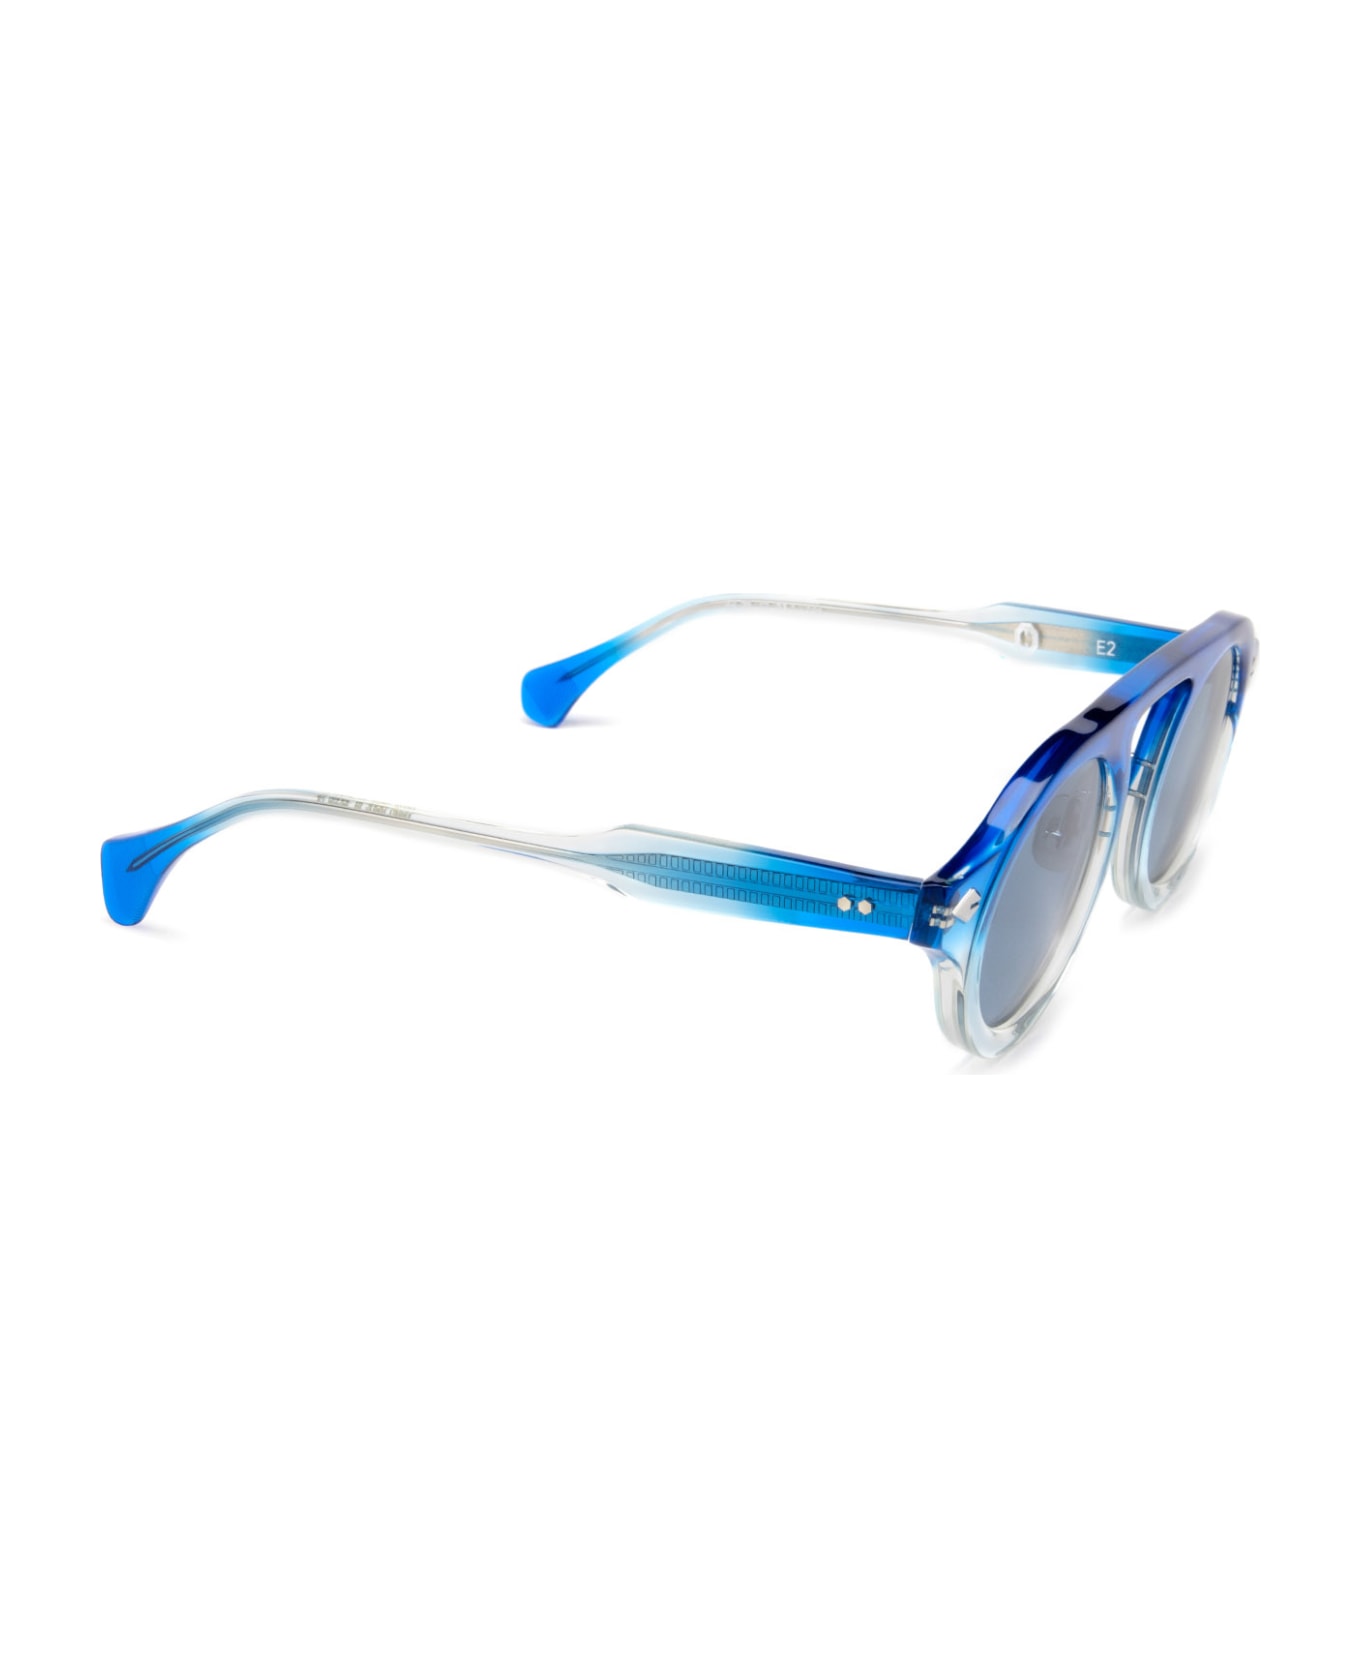 T Henri E2 Santorini Sunglasses